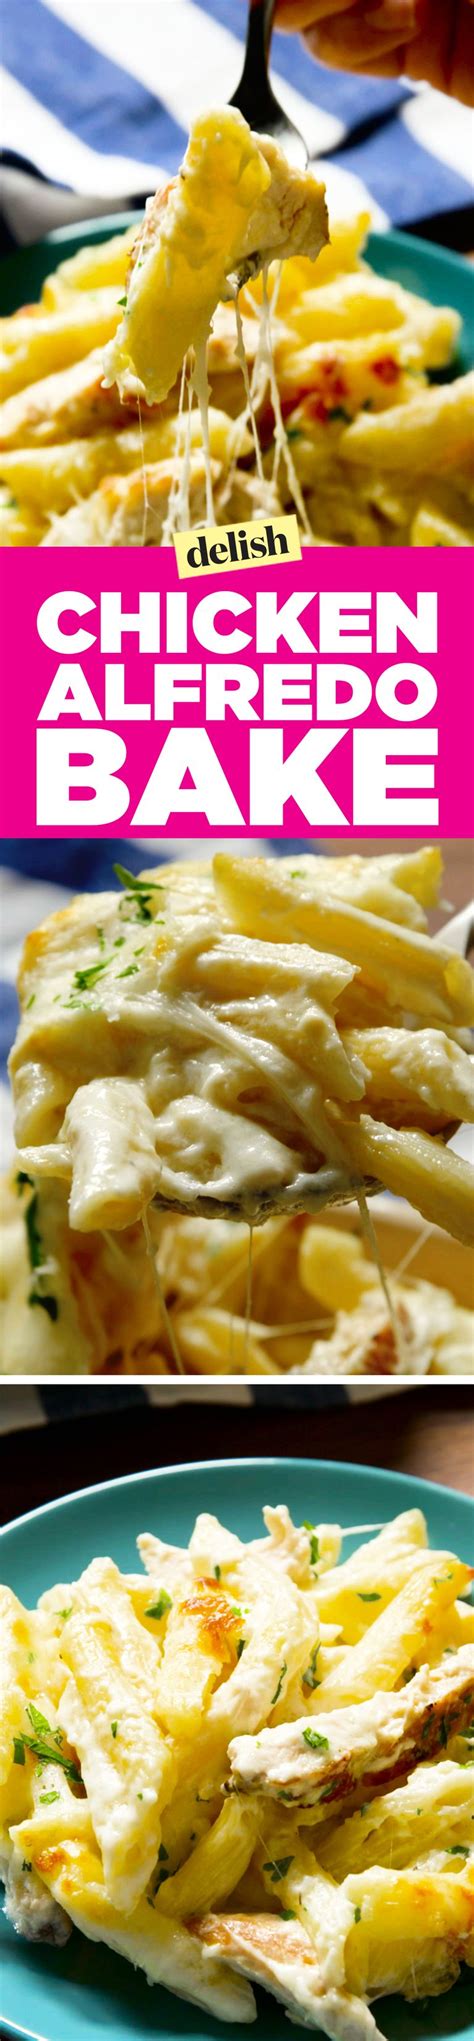 Chicken Alfredo Bake Baked Pasta Recipe